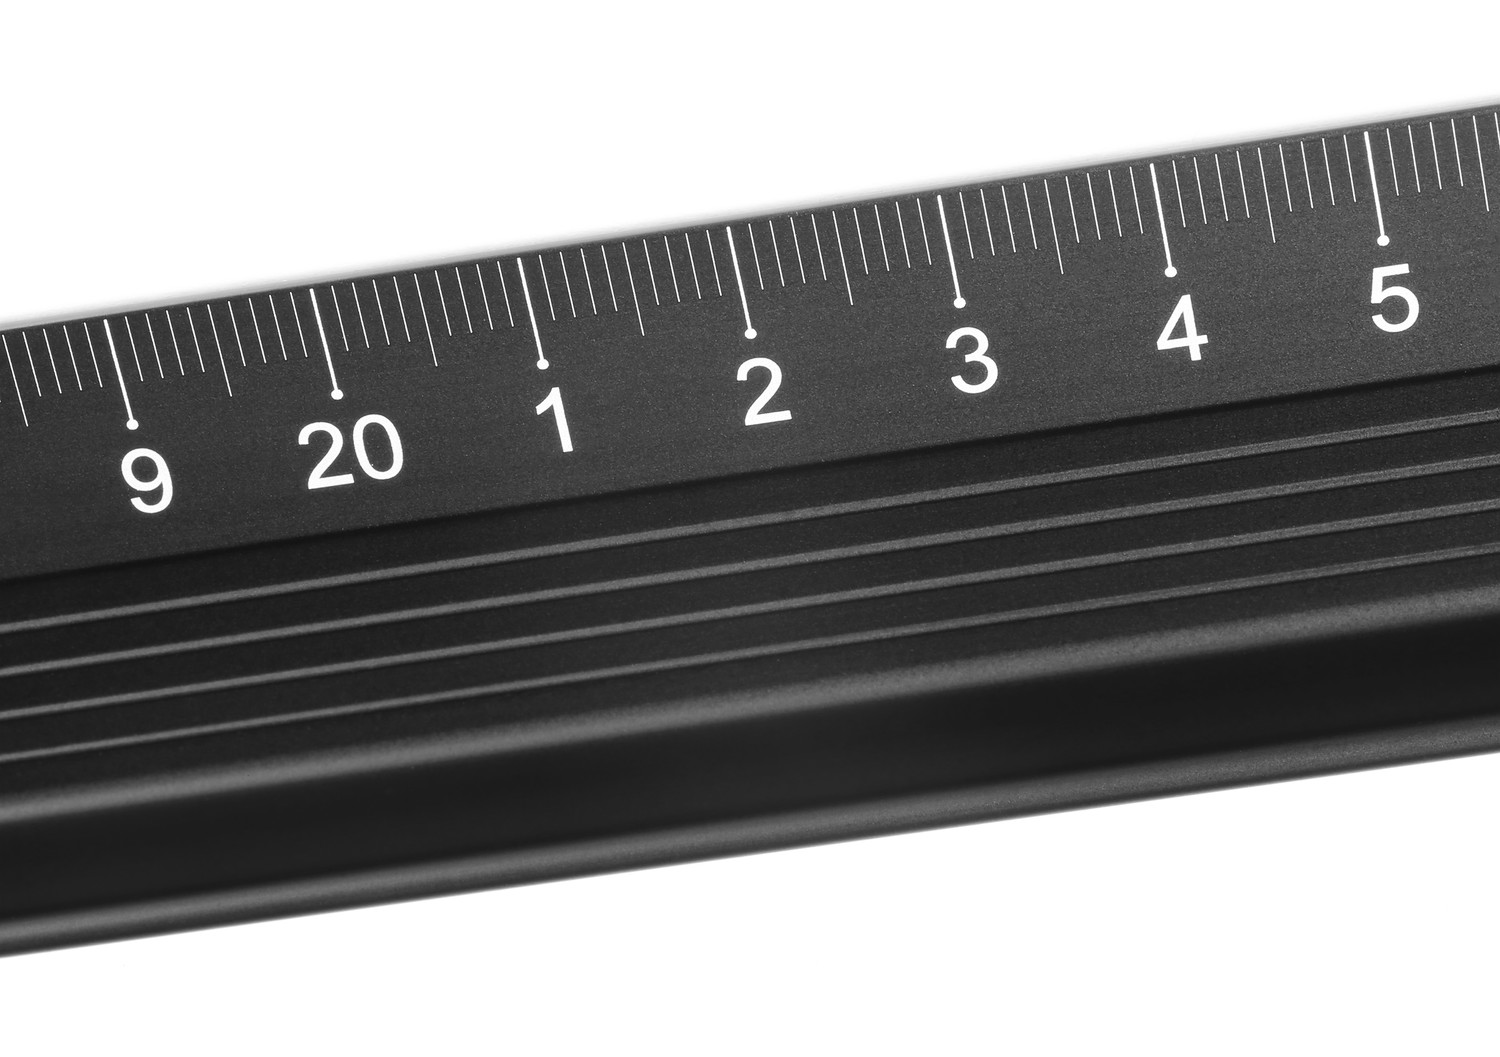 Handy centimetre markings for maximum precision cutting